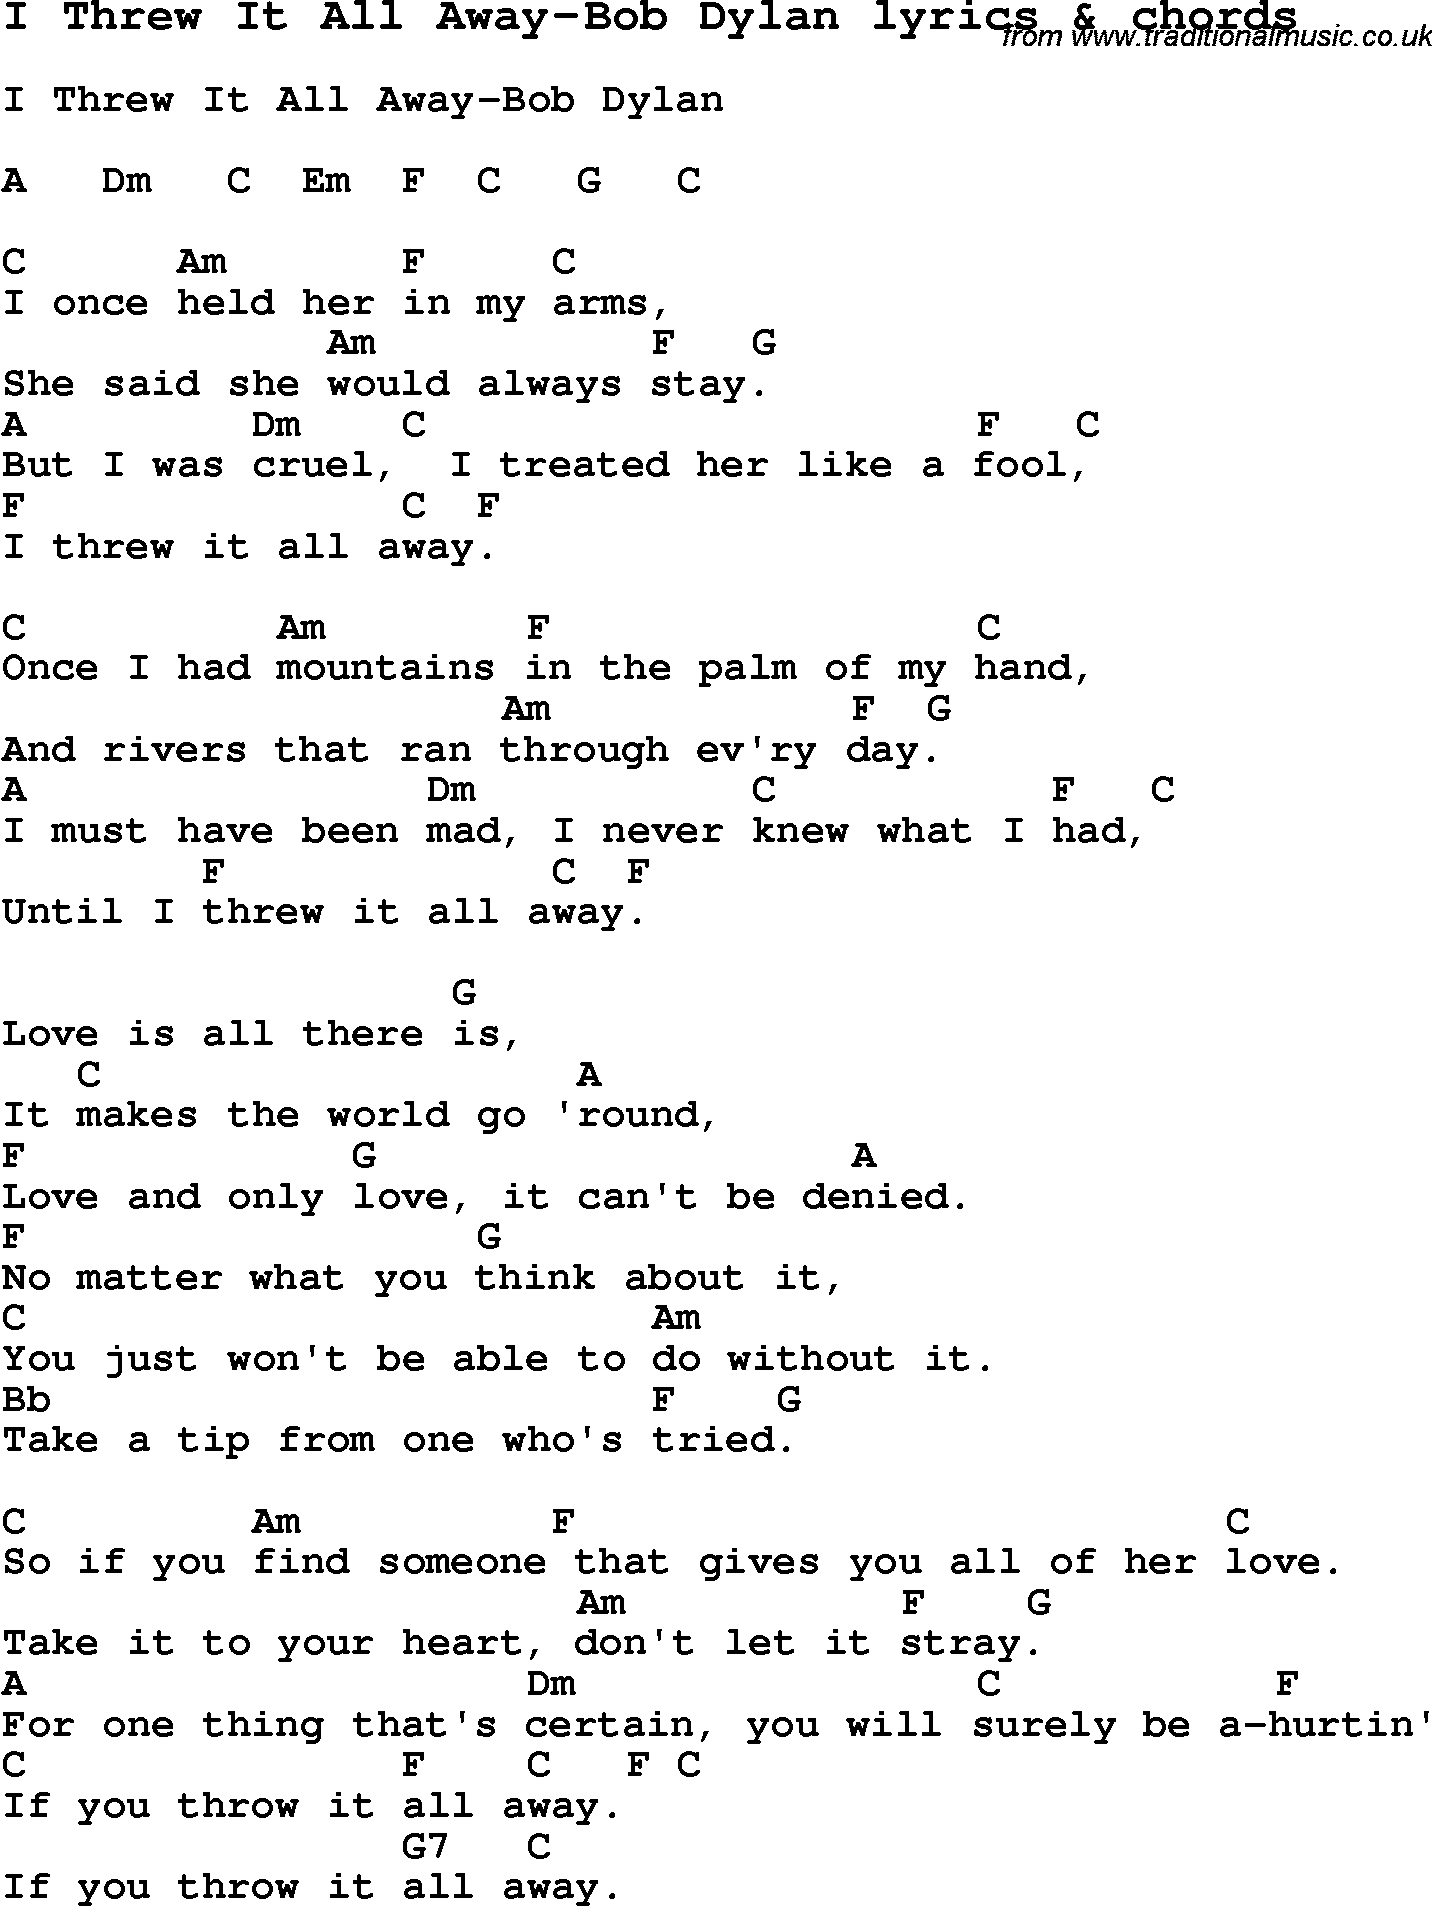 Love Song Lyrics for: I Threw It All Away-Bob Dylan with chords for Ukulele, Guitar Banjo etc.